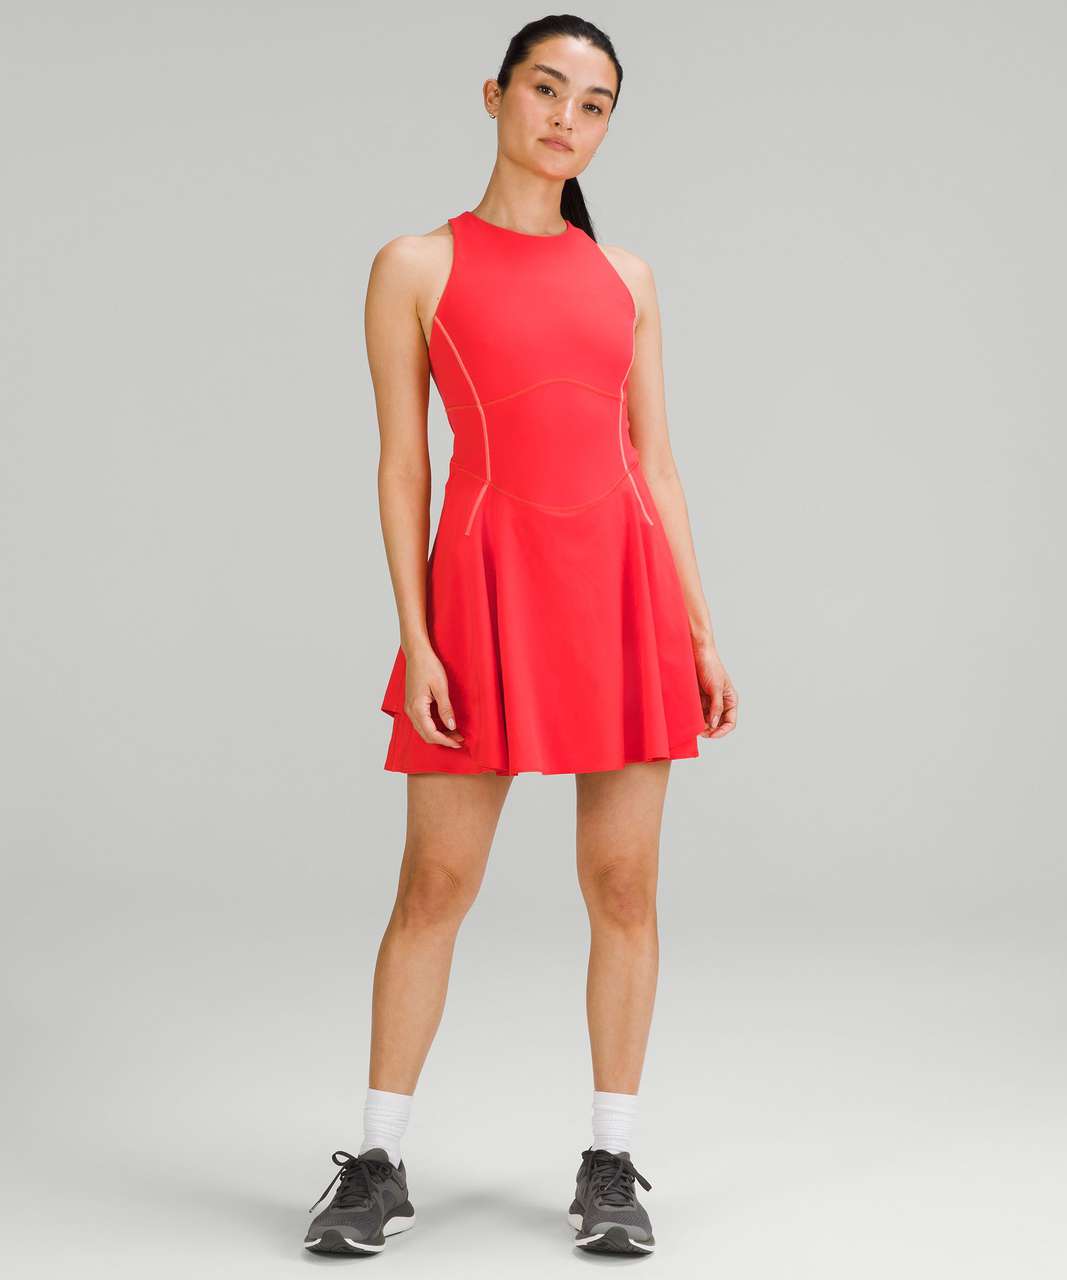 Lululemon Court Crush Tennis Dress - 142160114